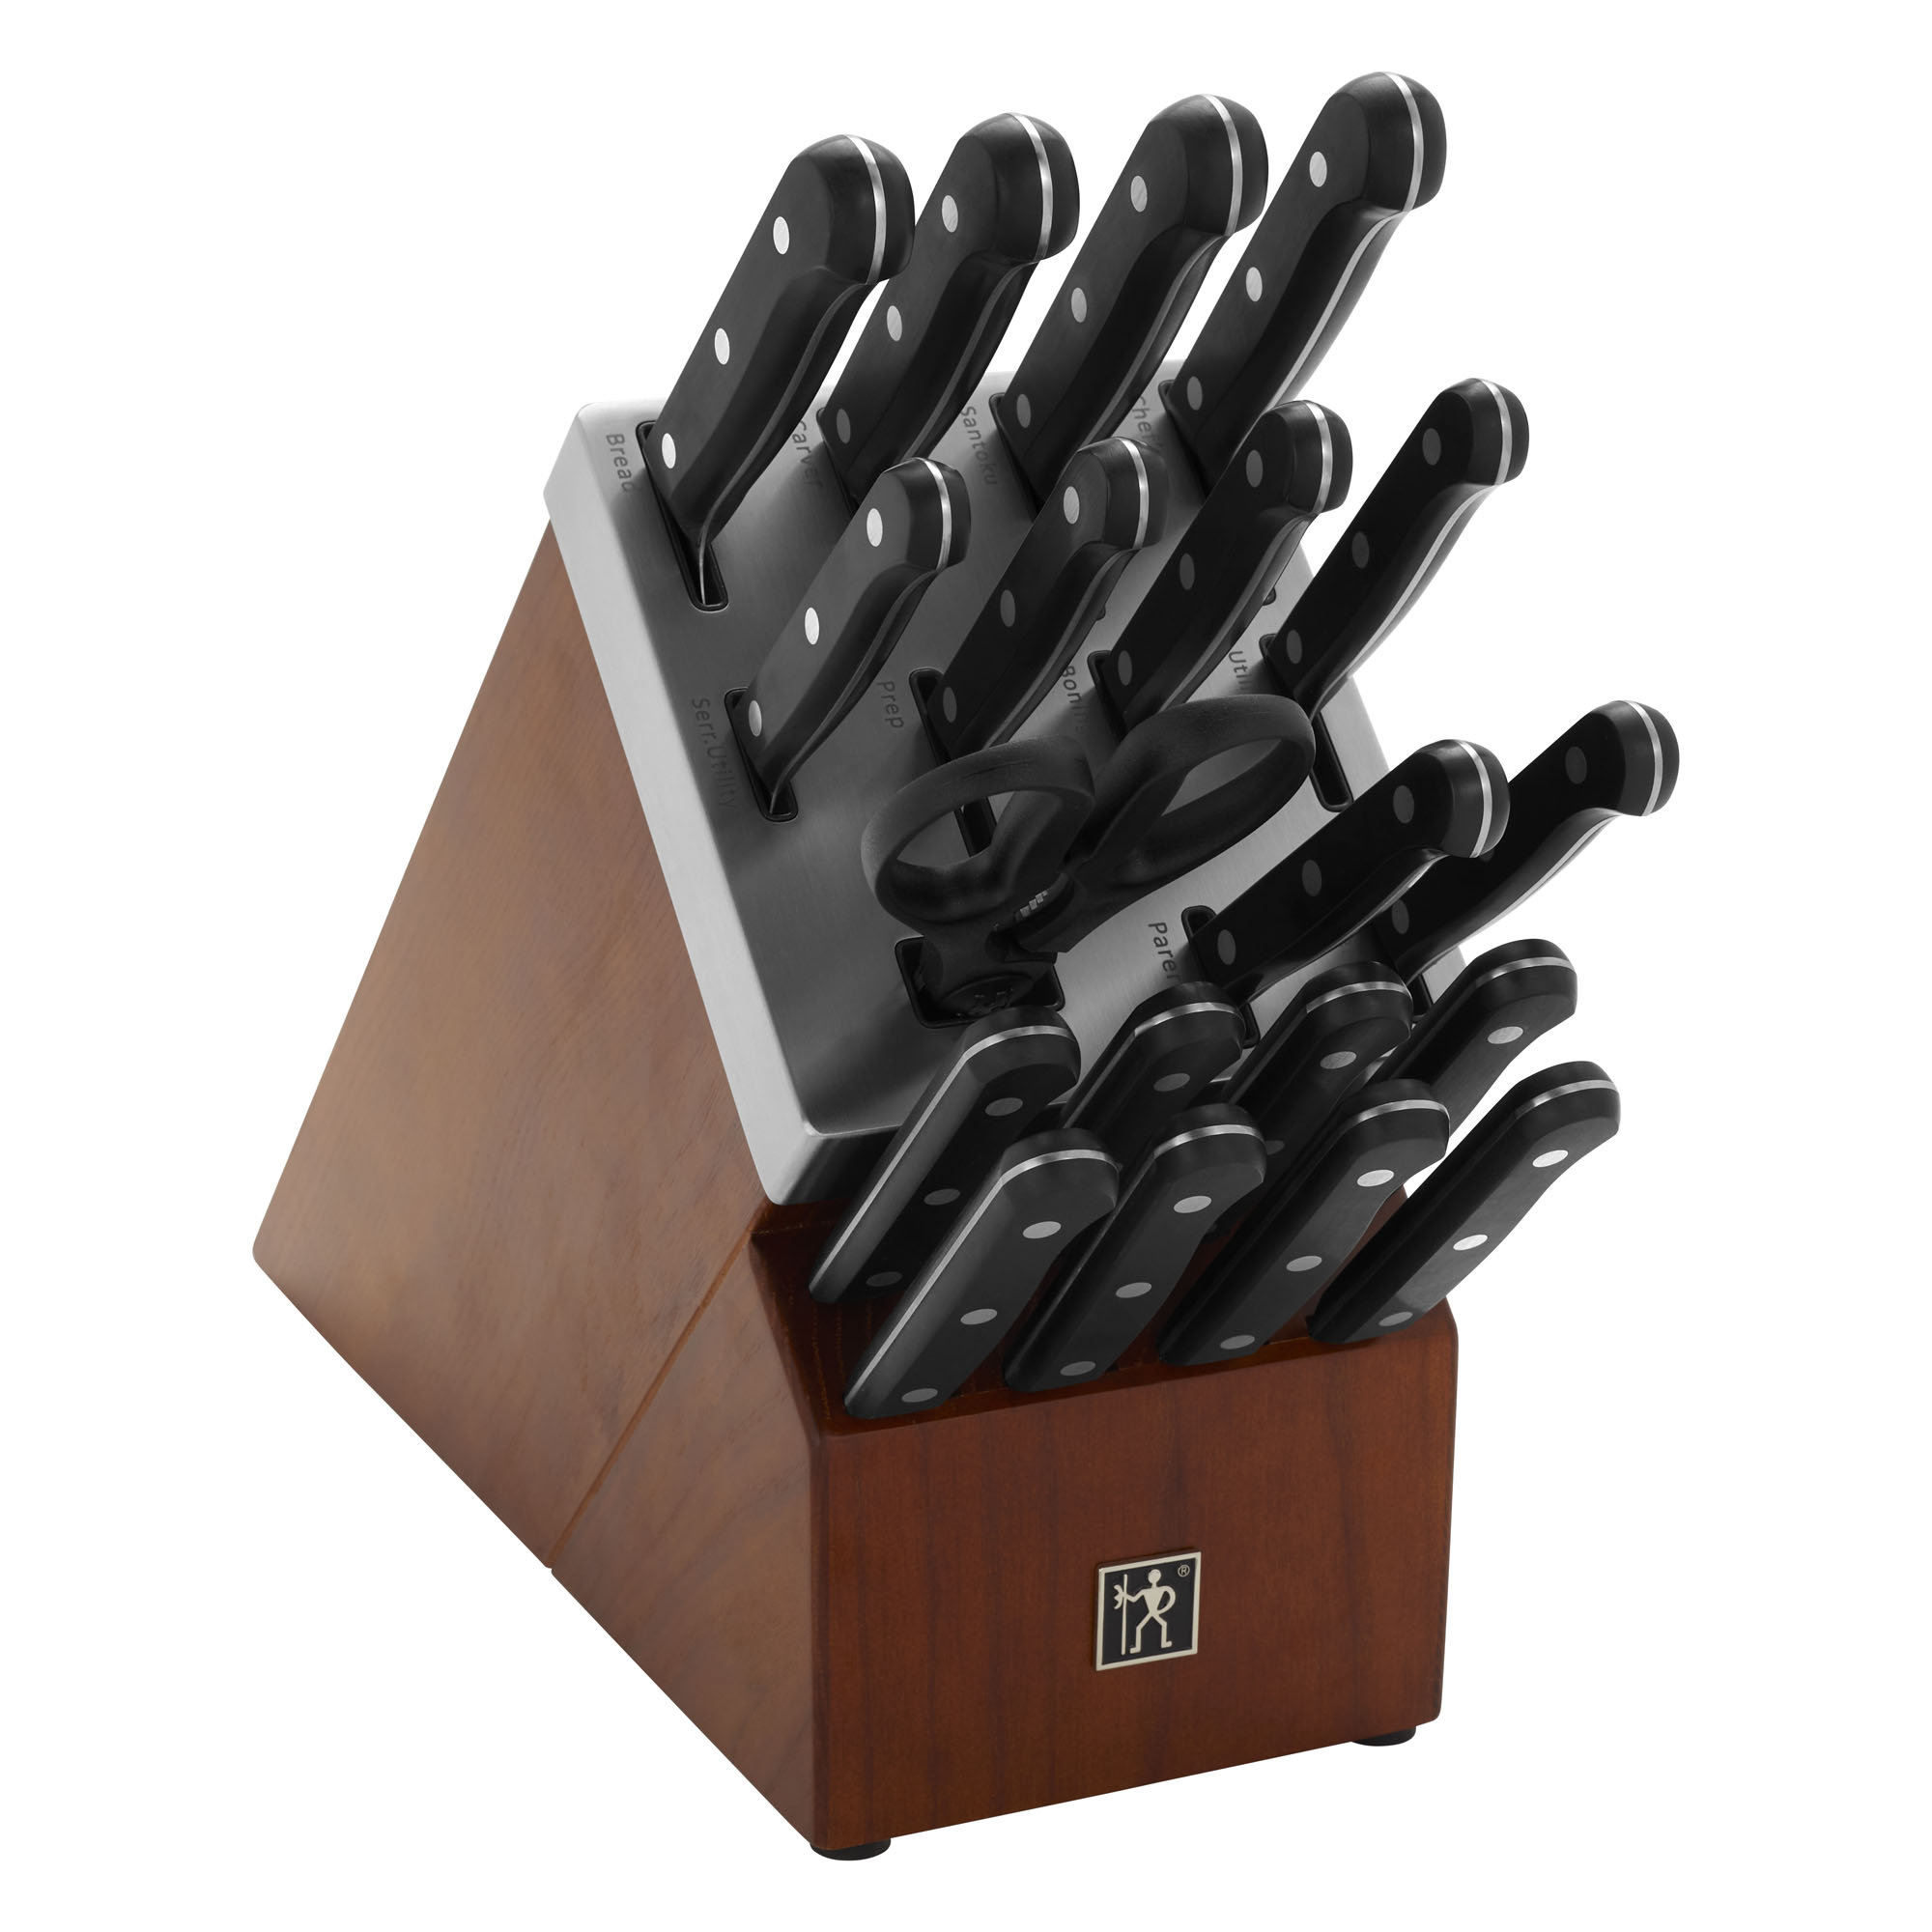 Farberware 18-piece Never Needs Sharpening Knife Block Set